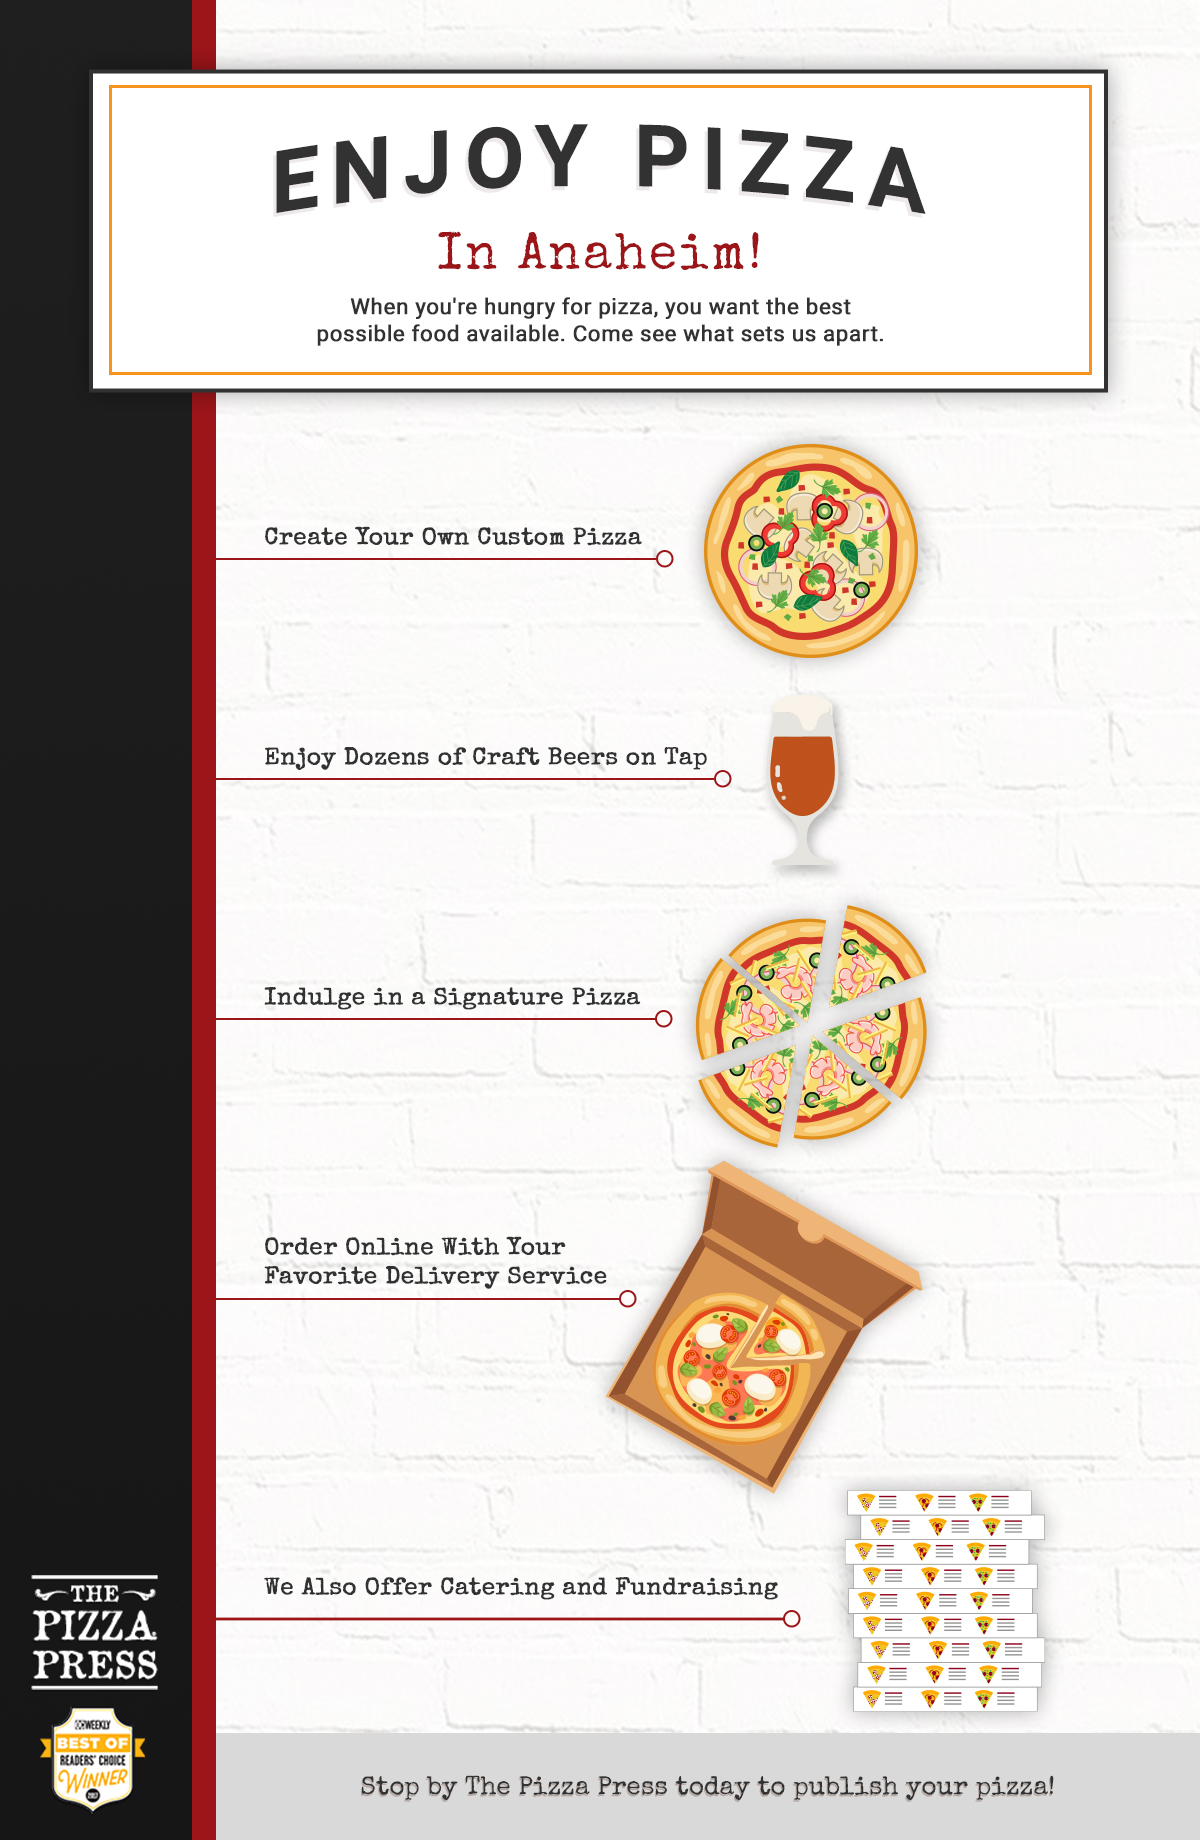 Enjoy-Pizza-In-Anaheim-Infographic-5fe23460b9c1f